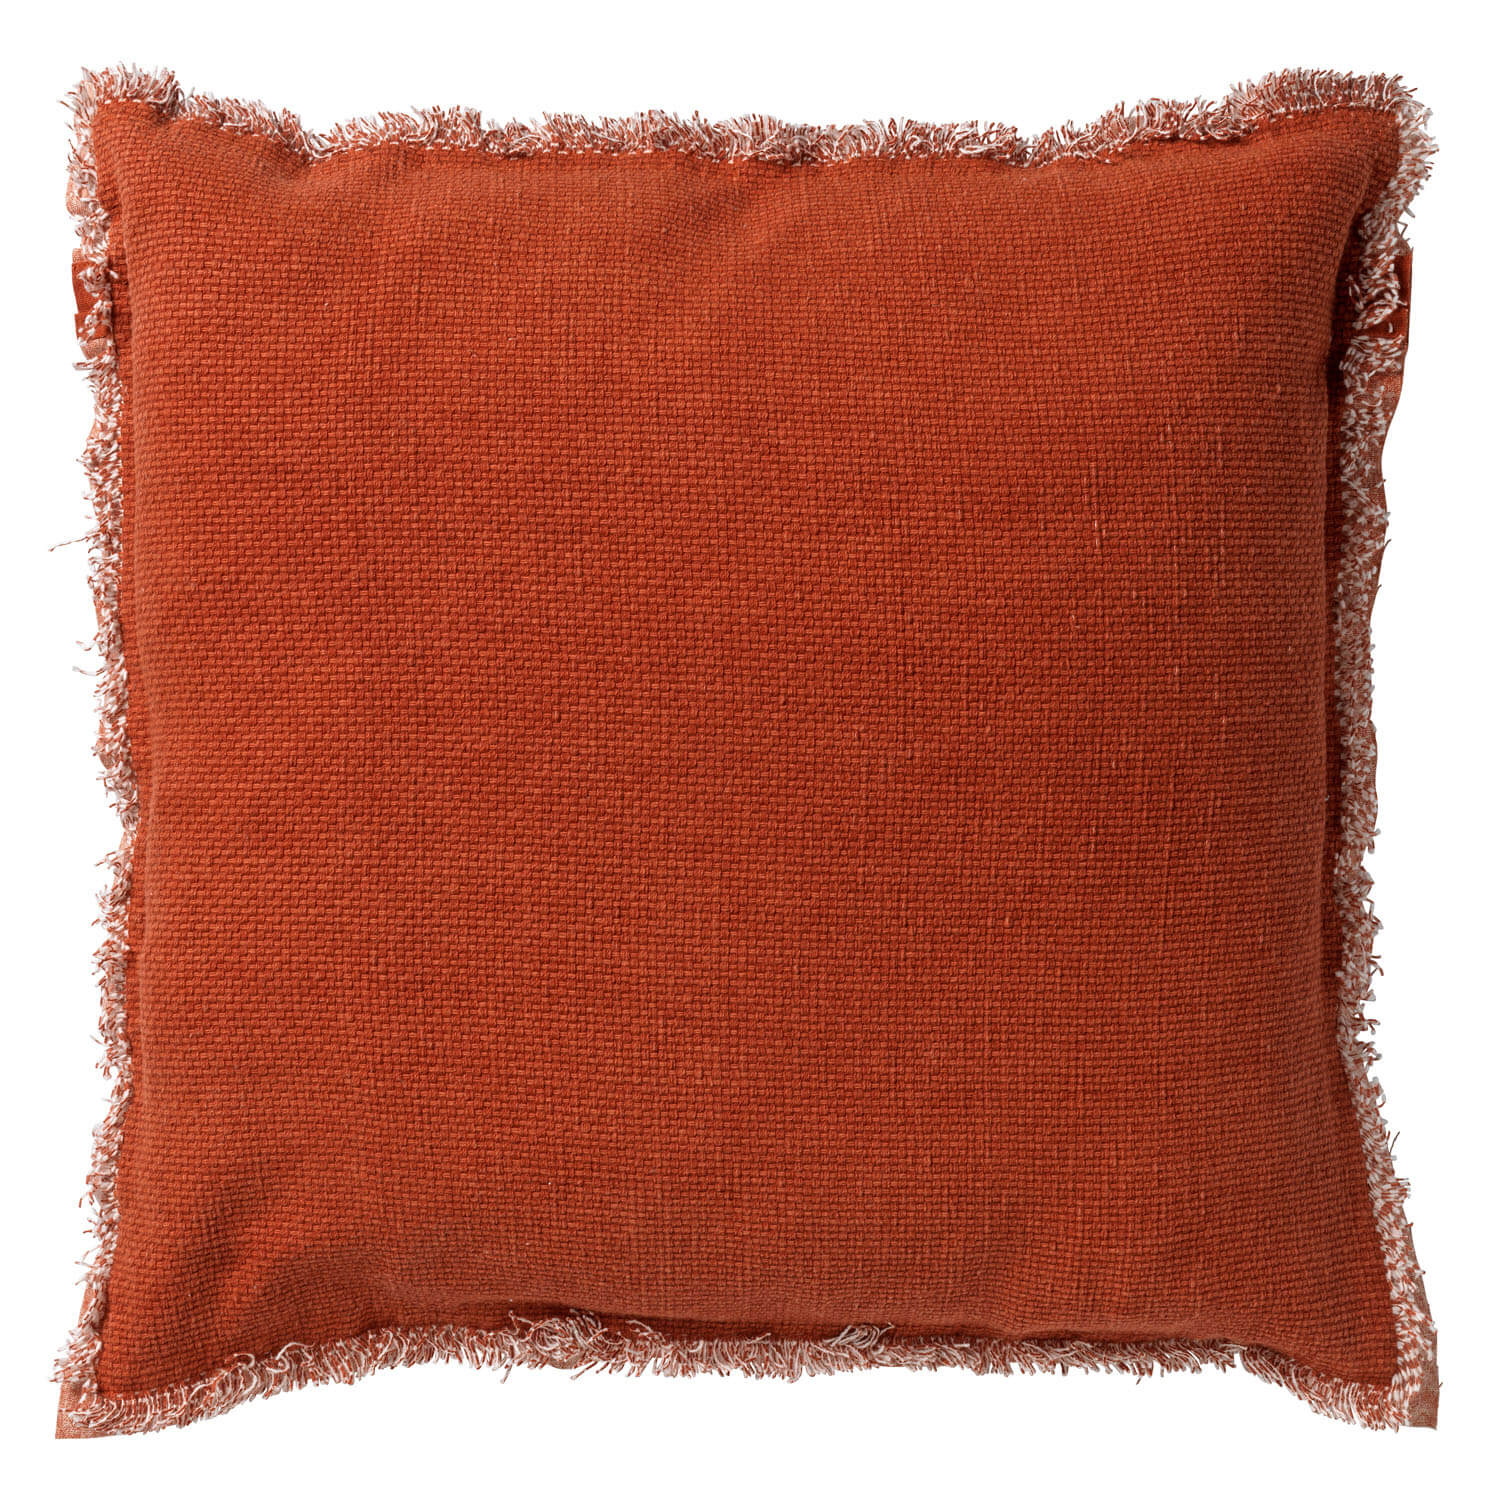 BURTO - Kussenhoes 45x45 cm - gewassen katoen - Potters Clay - oranje